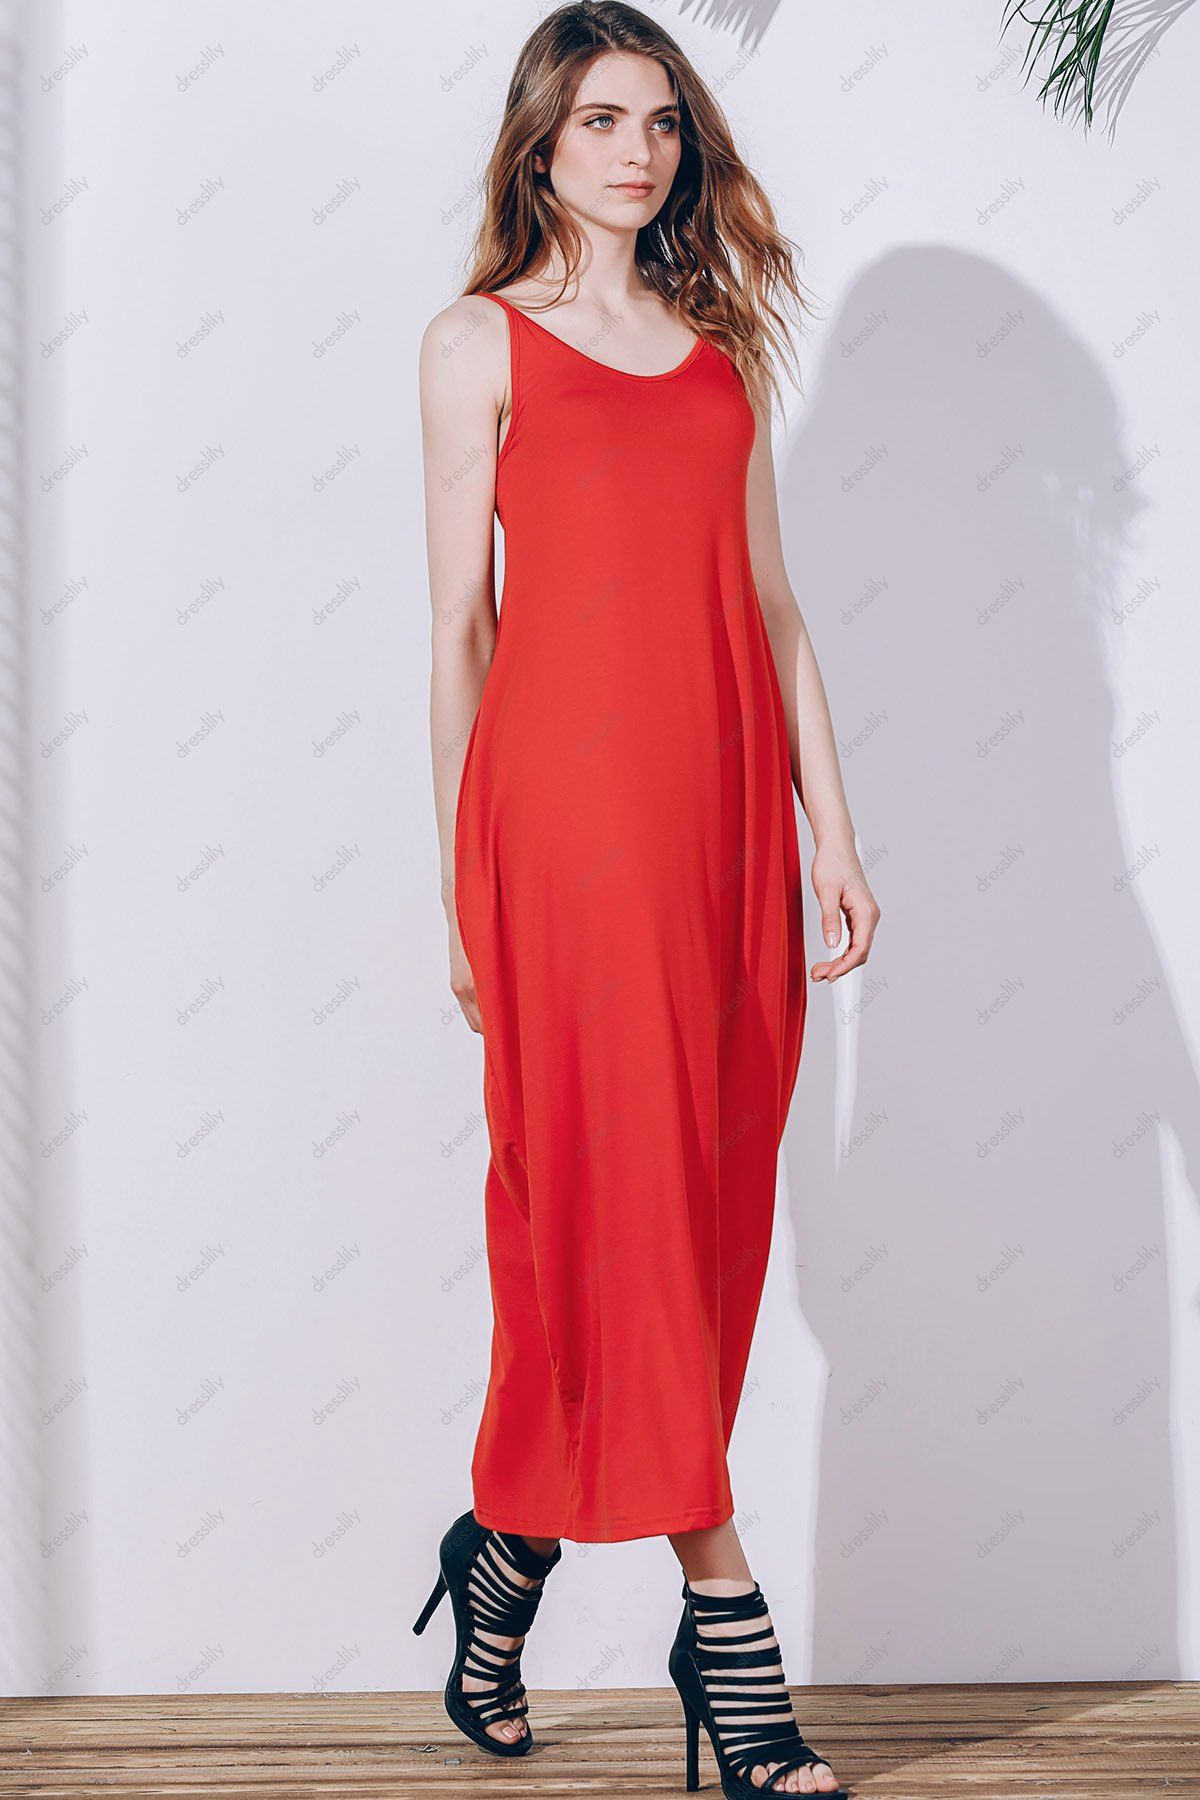 Stylish Spaghetti Strap Solid Color Pocket Design Women's Dress 